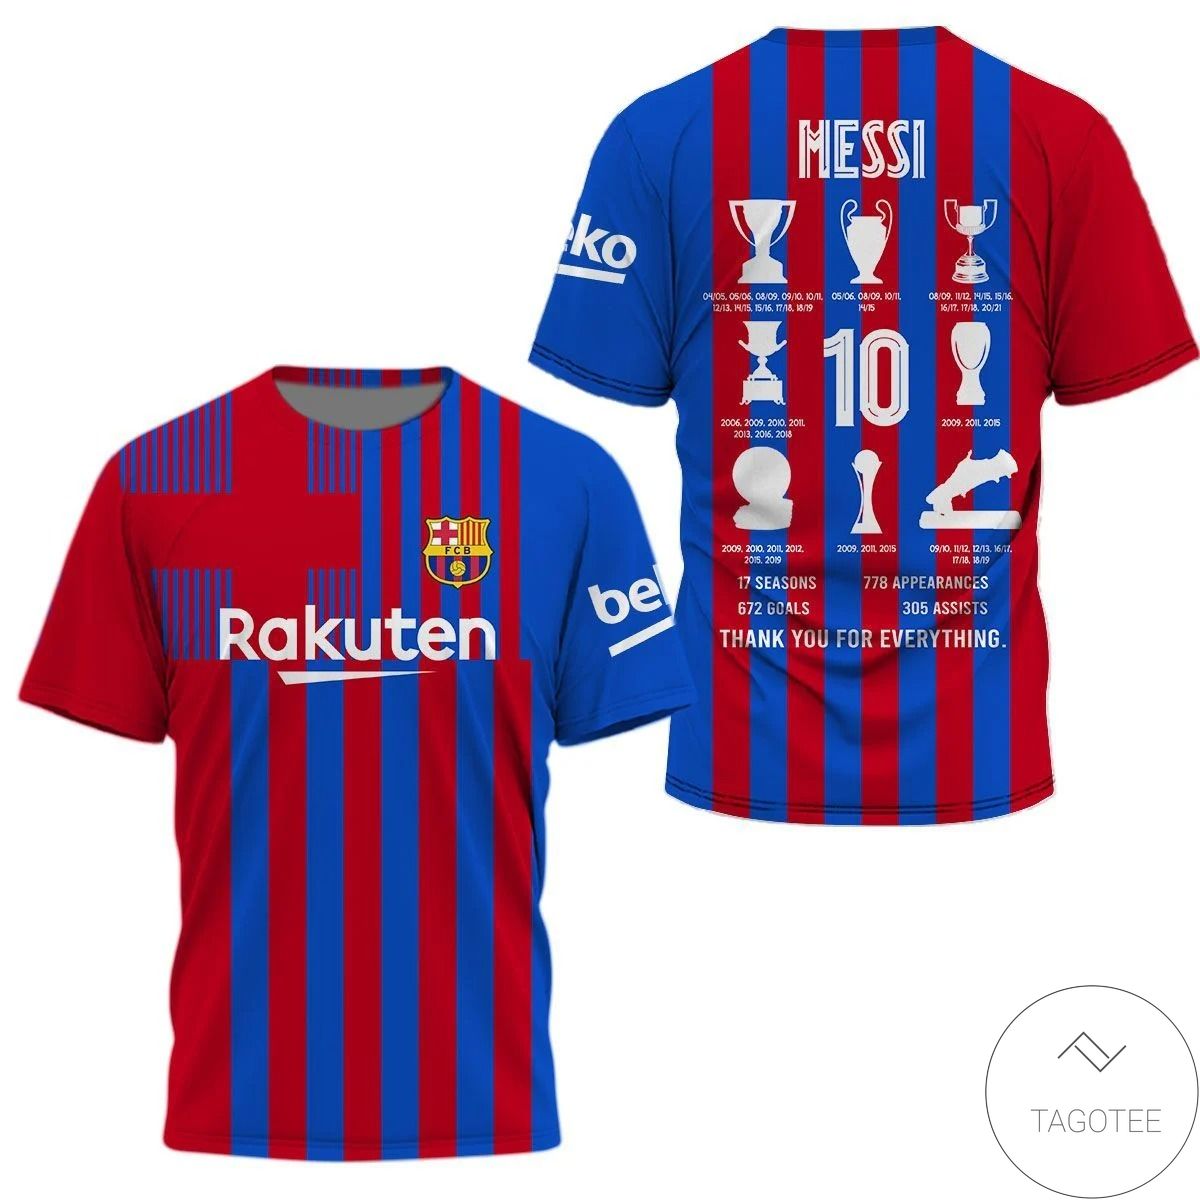 Rakuten Messi 10 Thank You For Everything T-Shirt